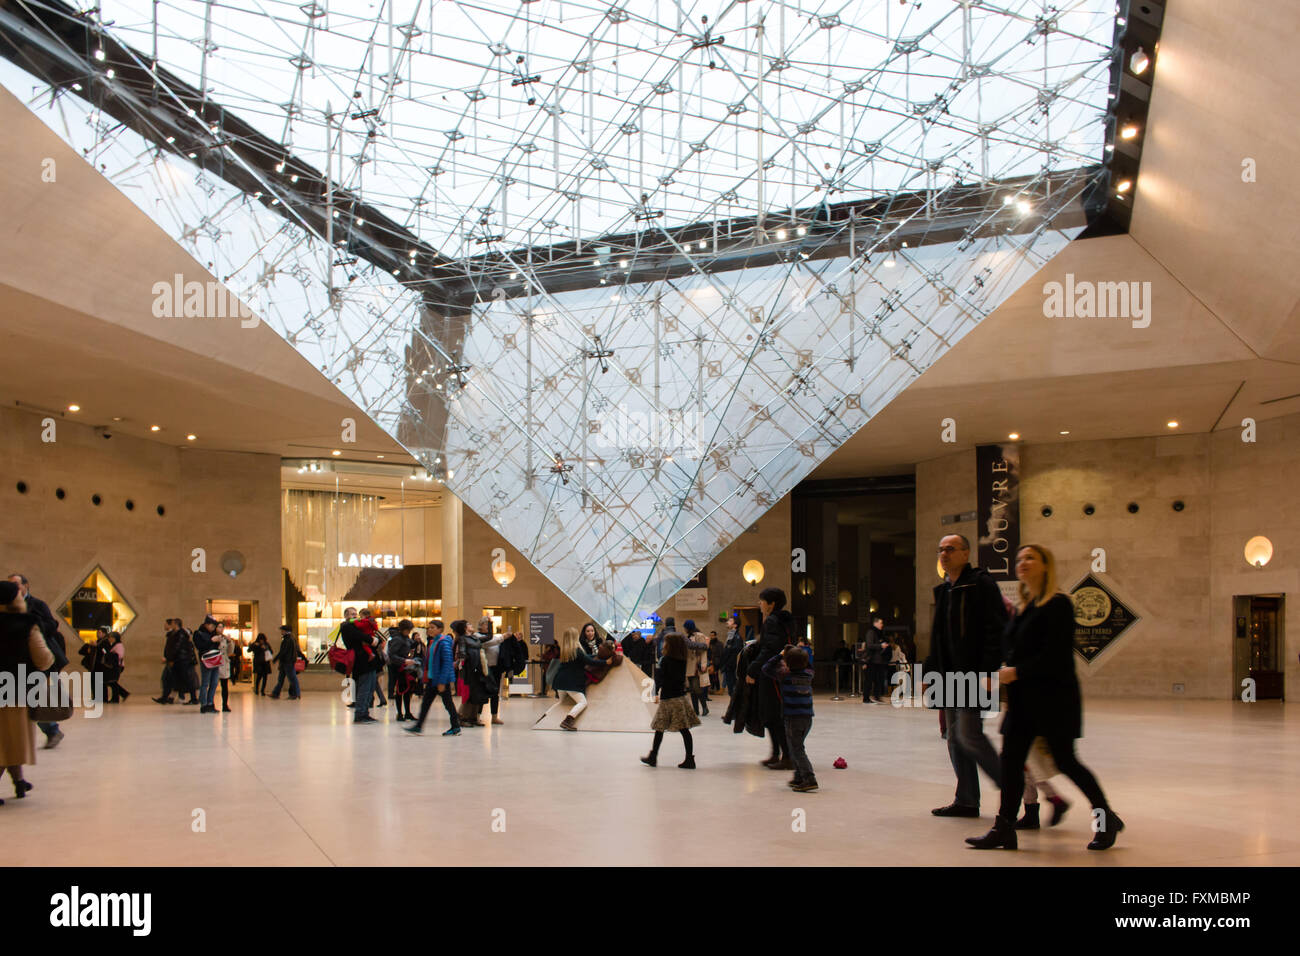 Invertierte Louvre Glaspyramide im Louvre-Shopping-Mall, Paris, Frankreich. Stockfoto